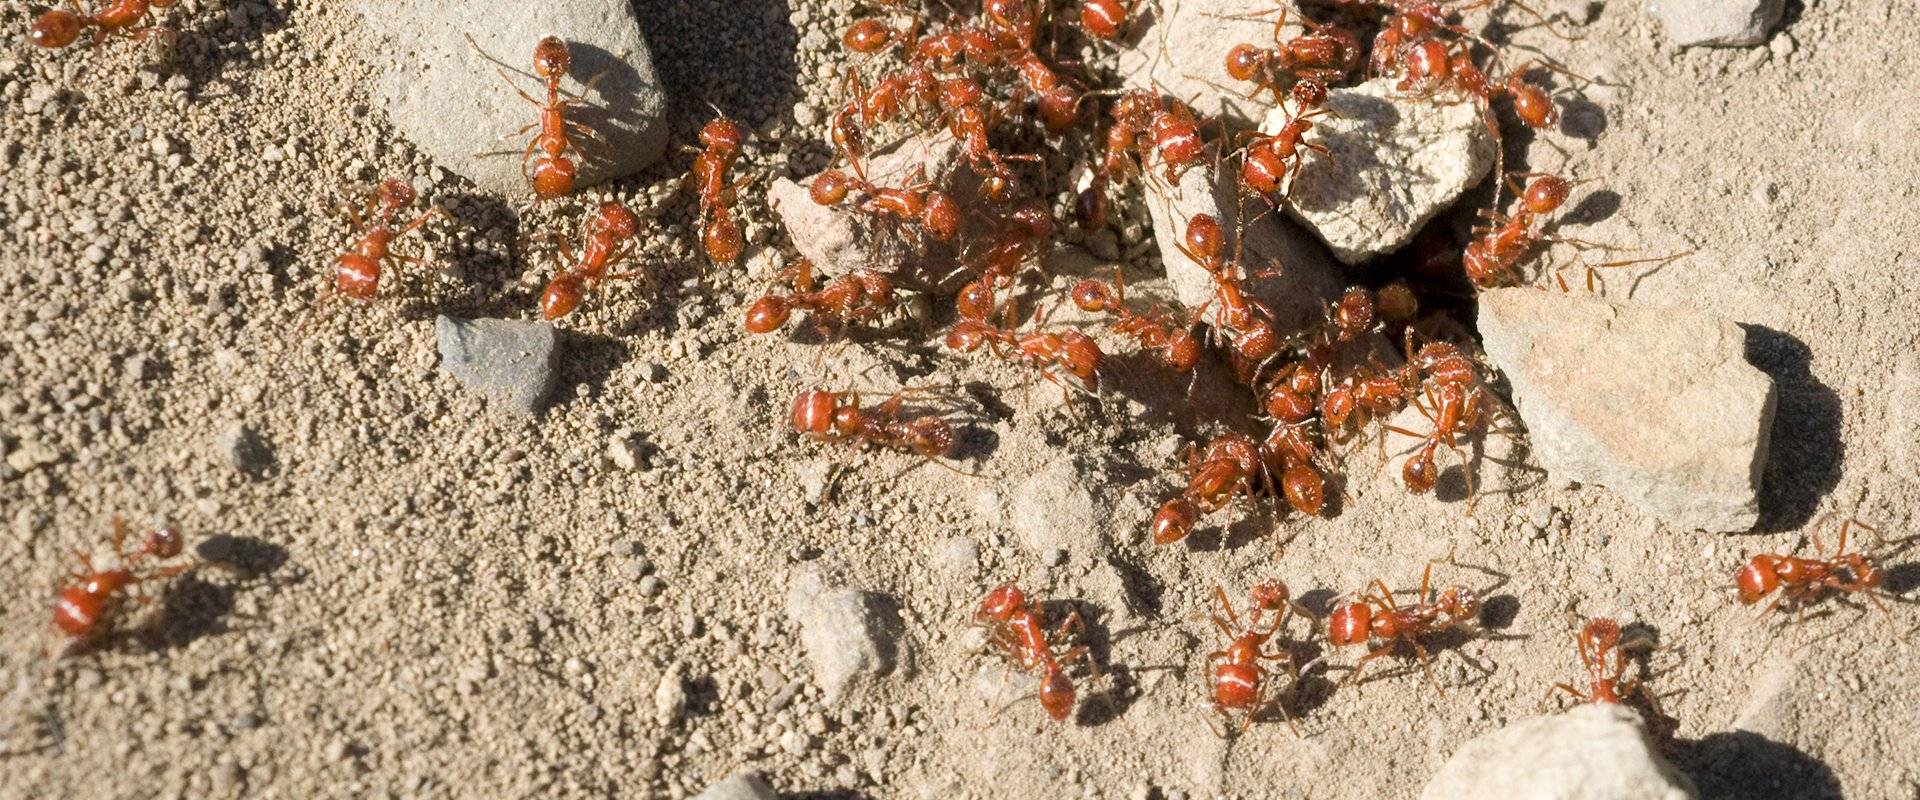 fire ants swarming